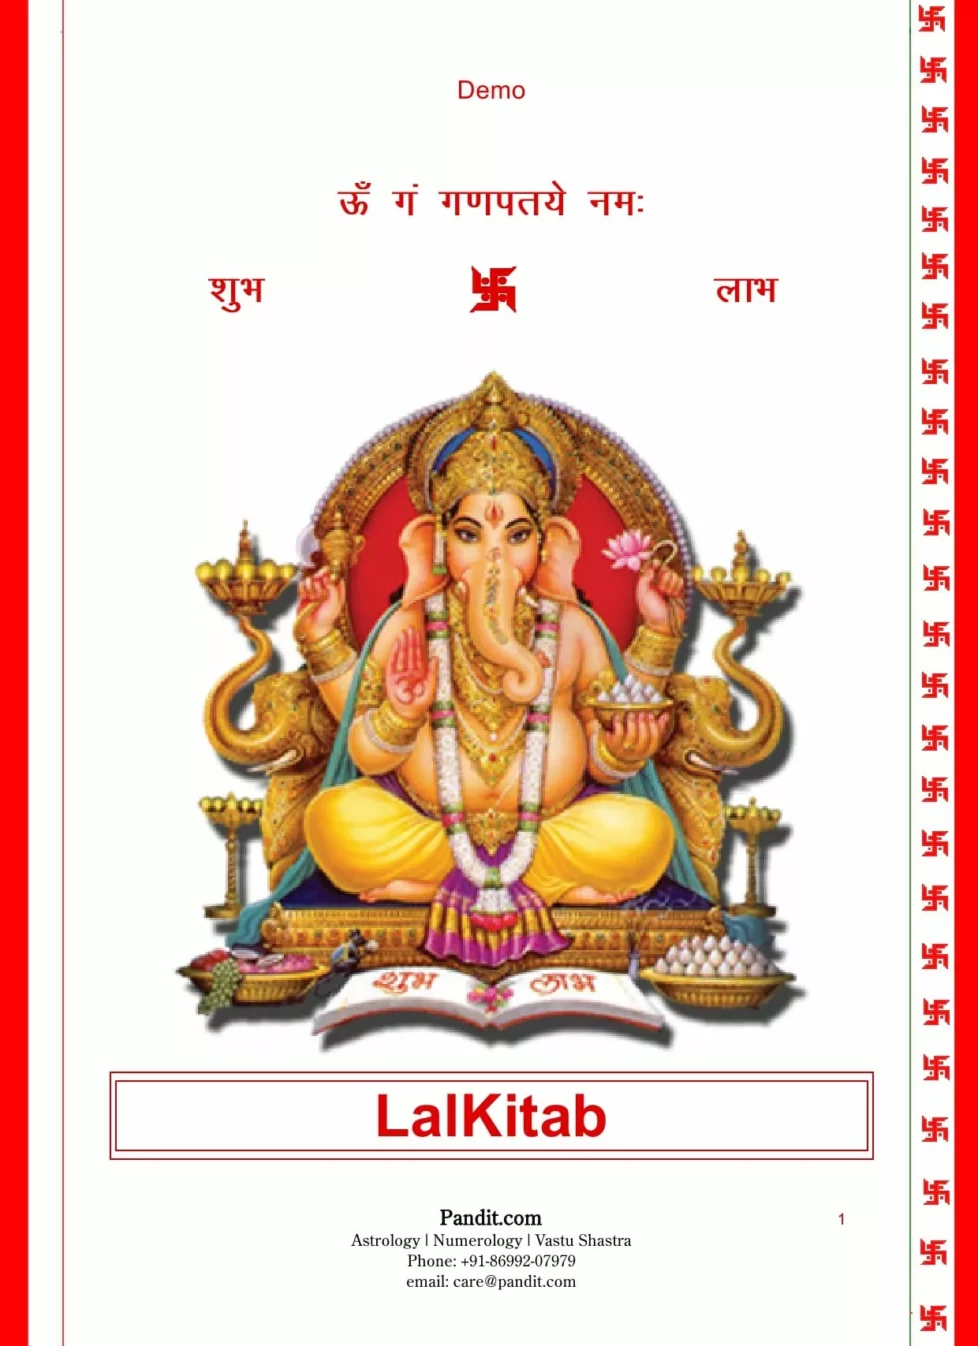 LalKitab Horoscope Sample 1